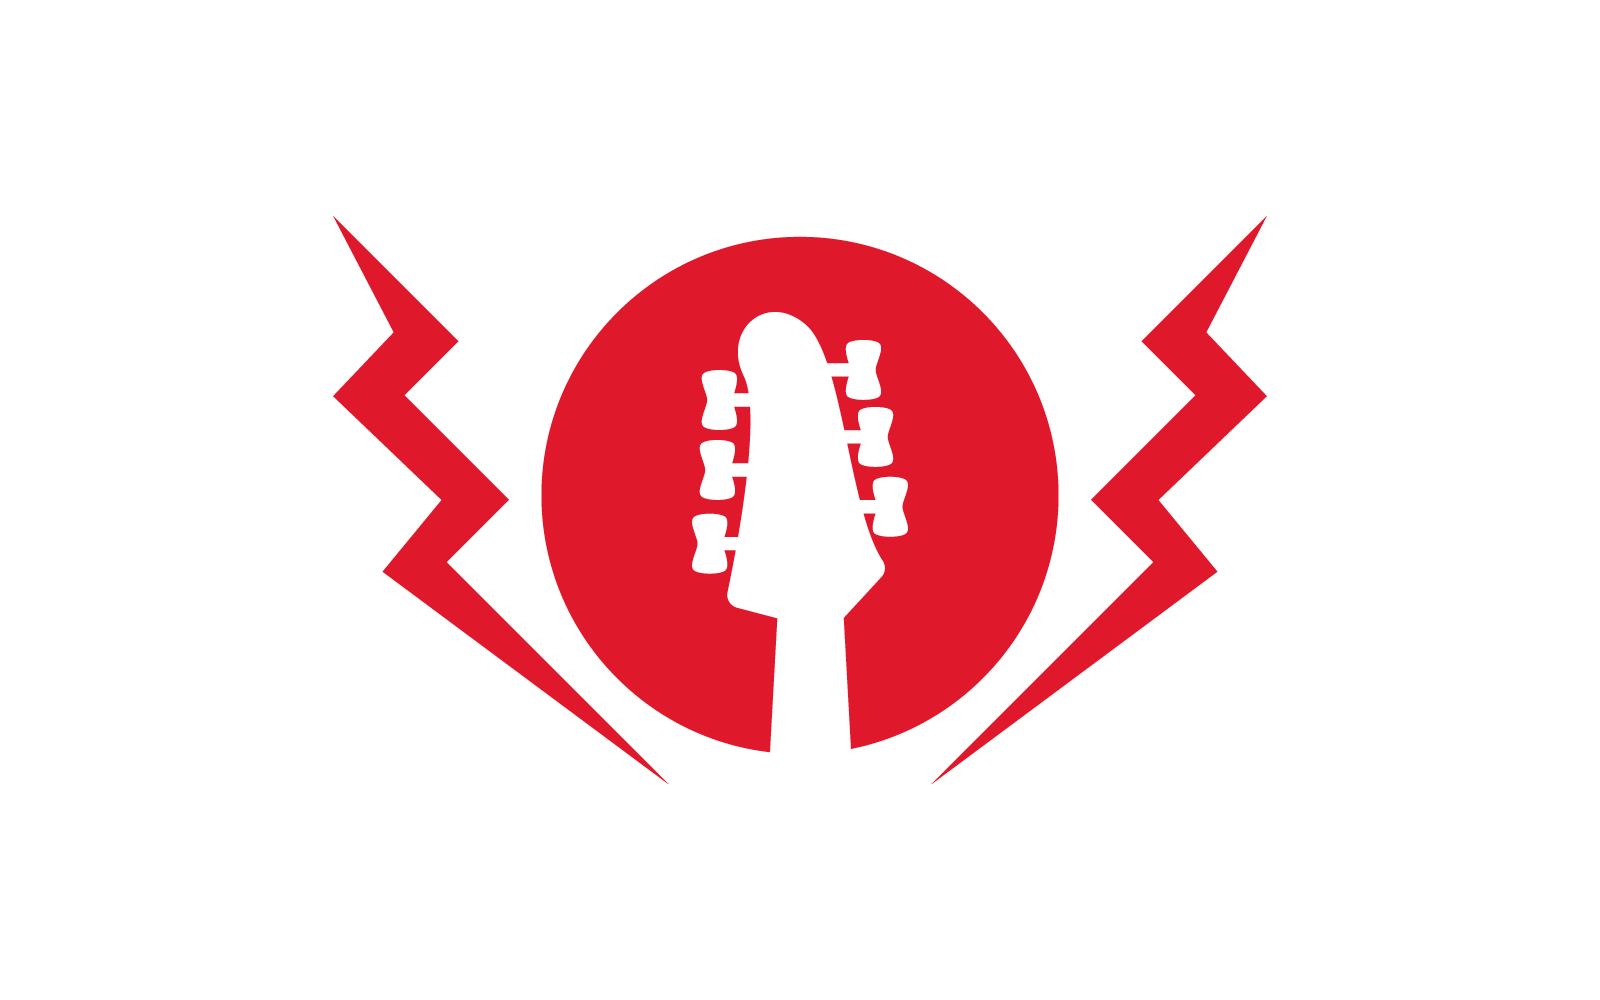 Guitar logo vector flat design template